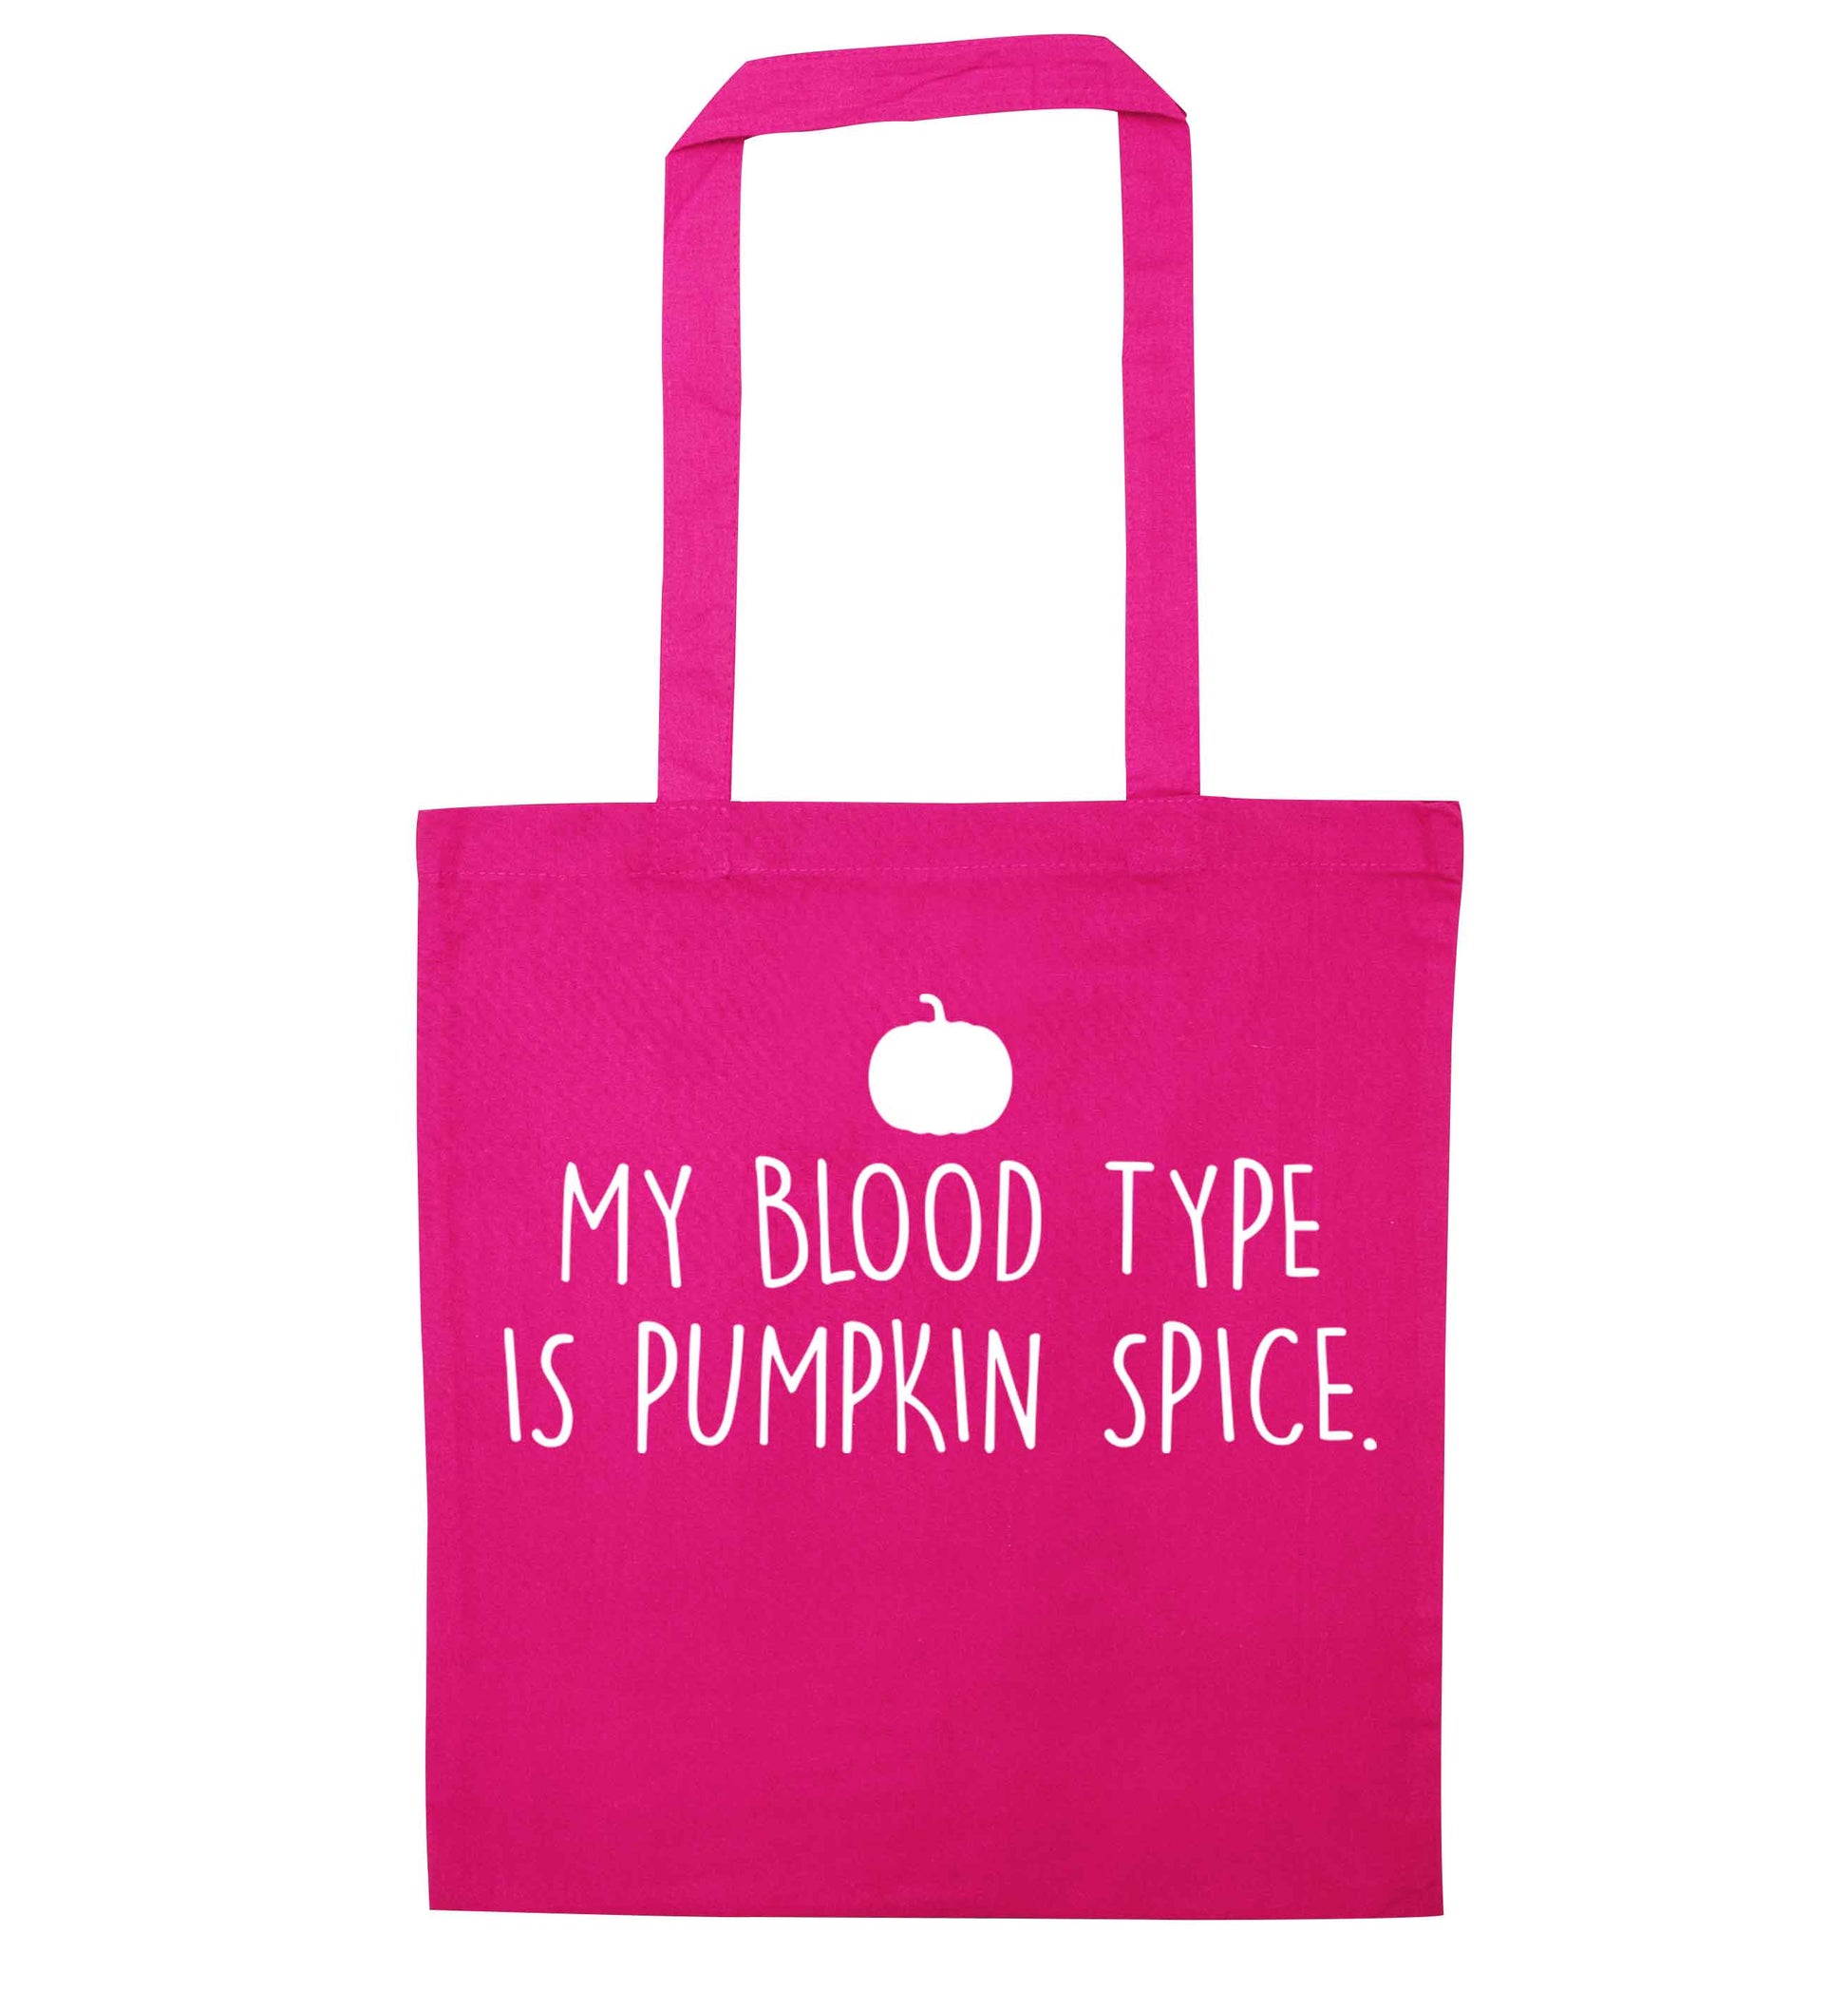 Let Be Pumpkin Spice pink tote bag